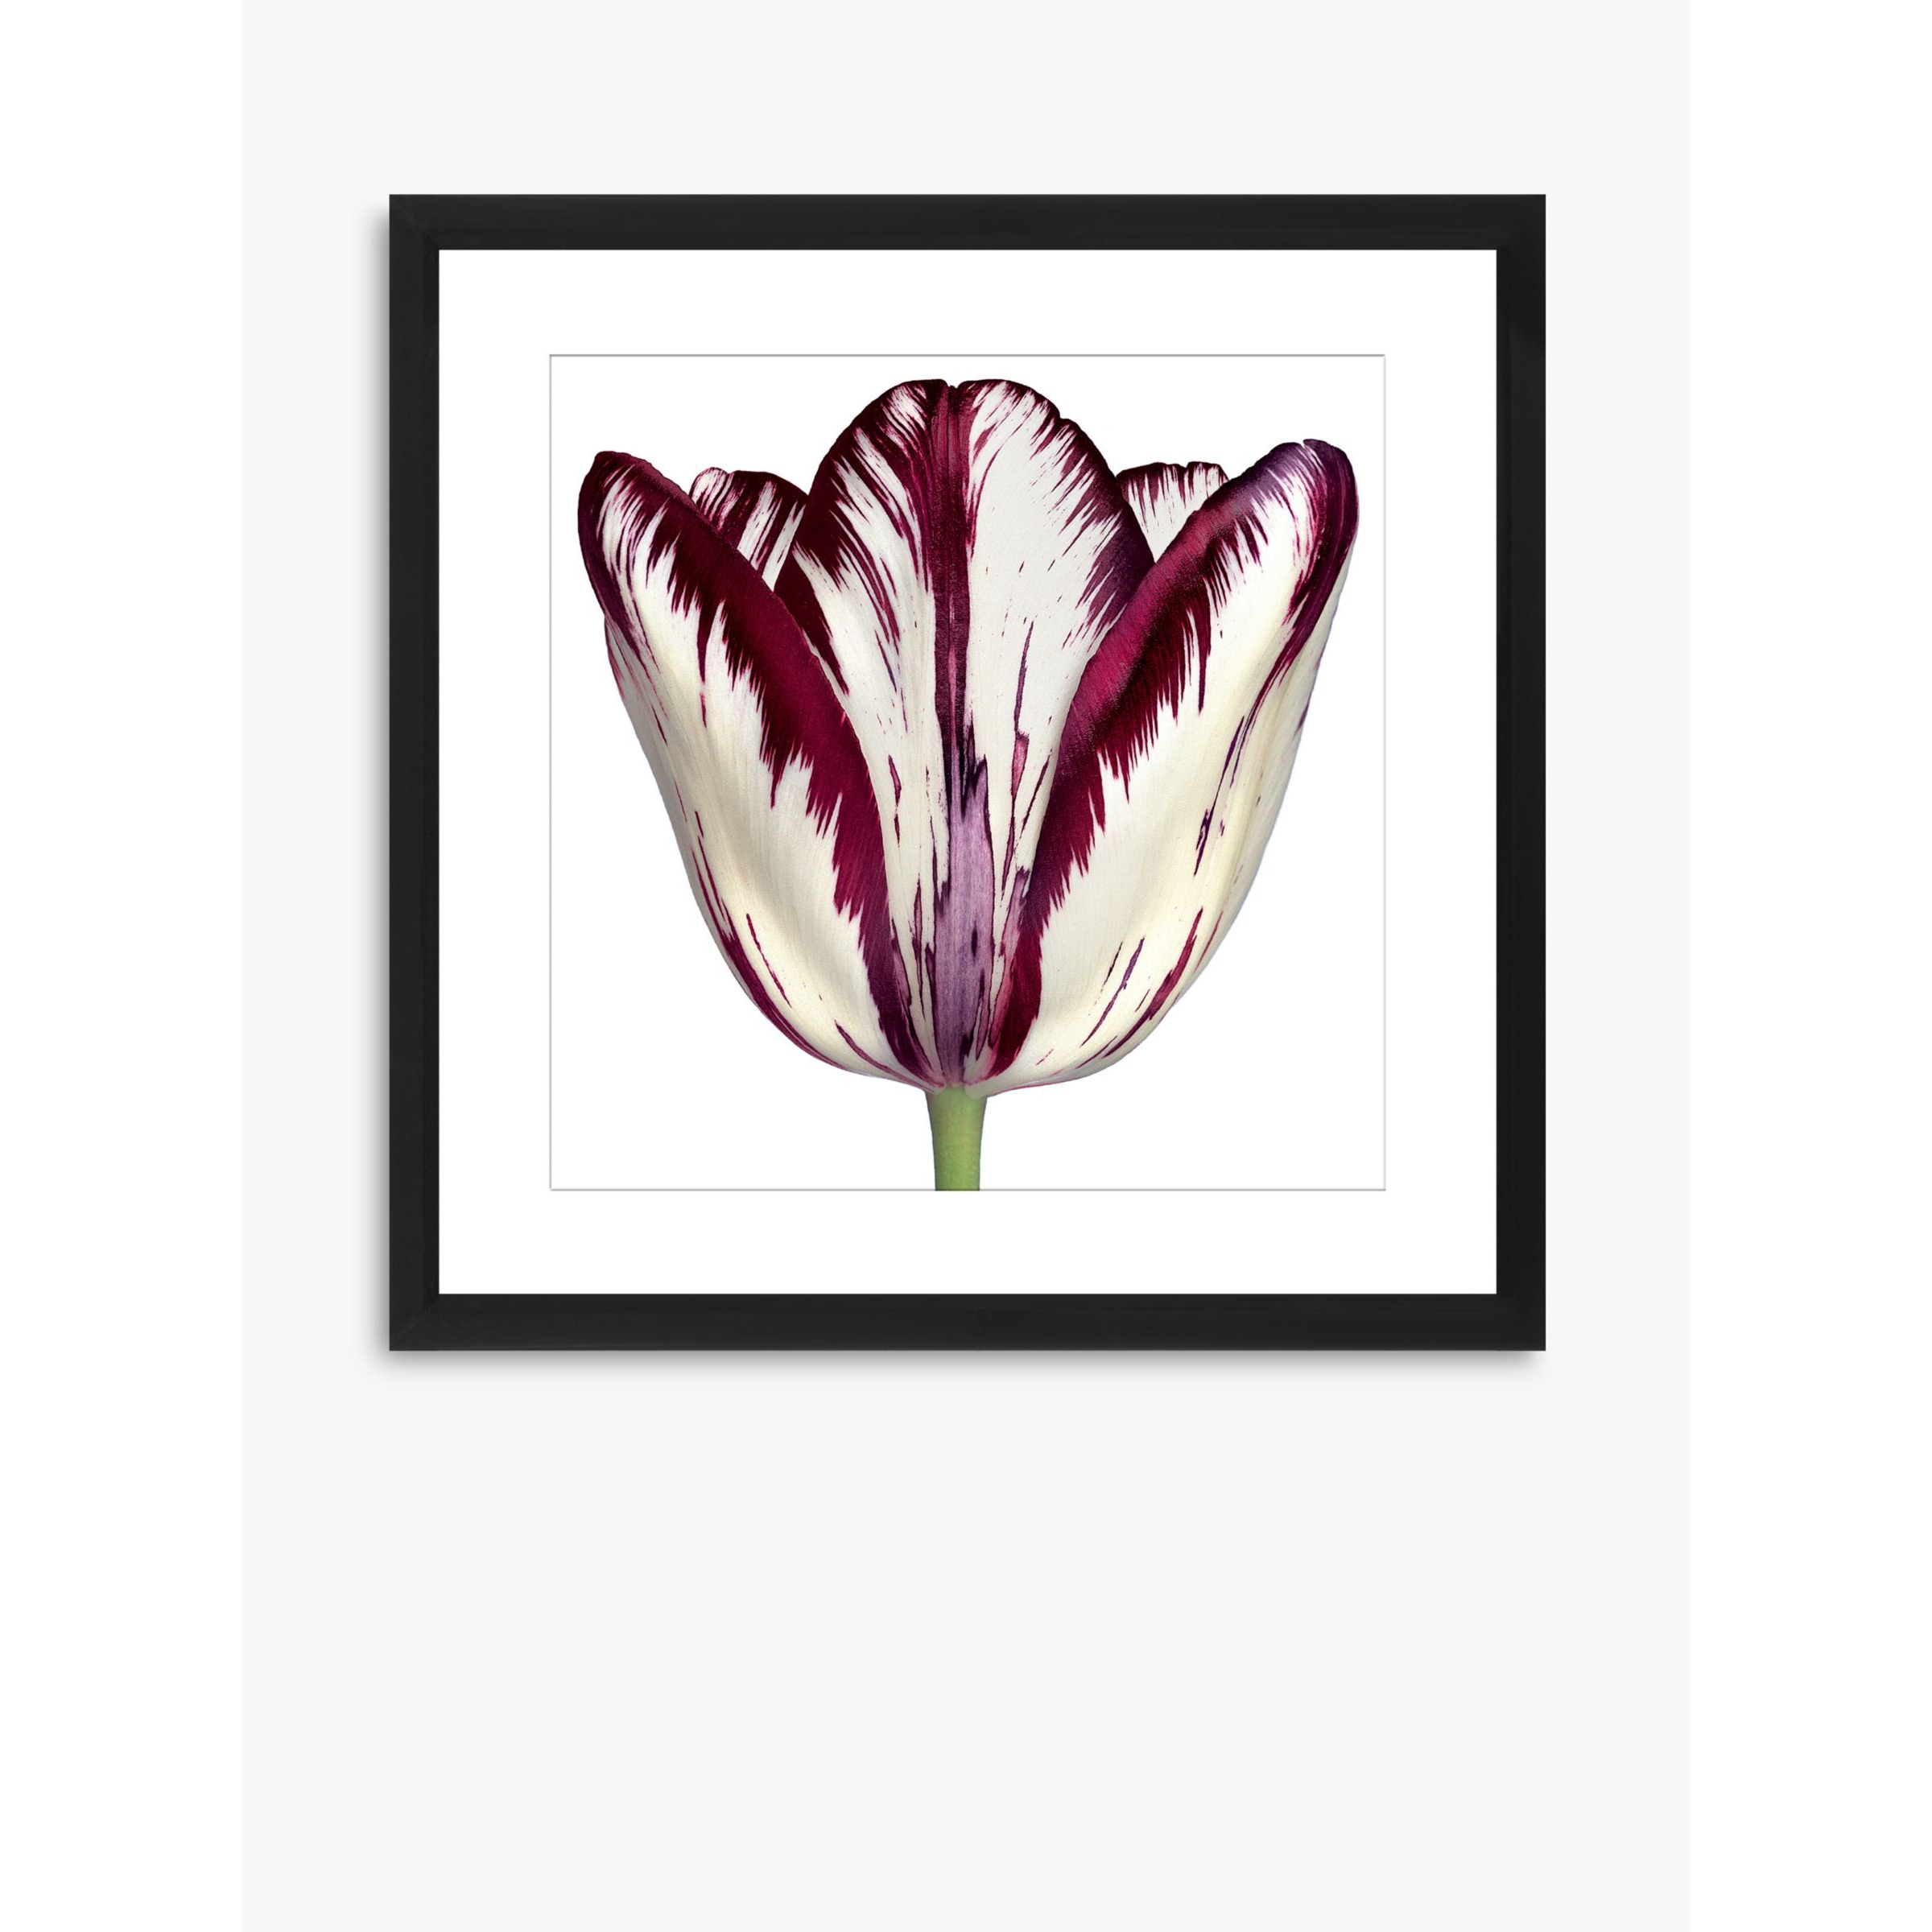 Burgundy Tulip 1 - Framed Print & Mount, 56 x 56cm, Burgundy - image 1